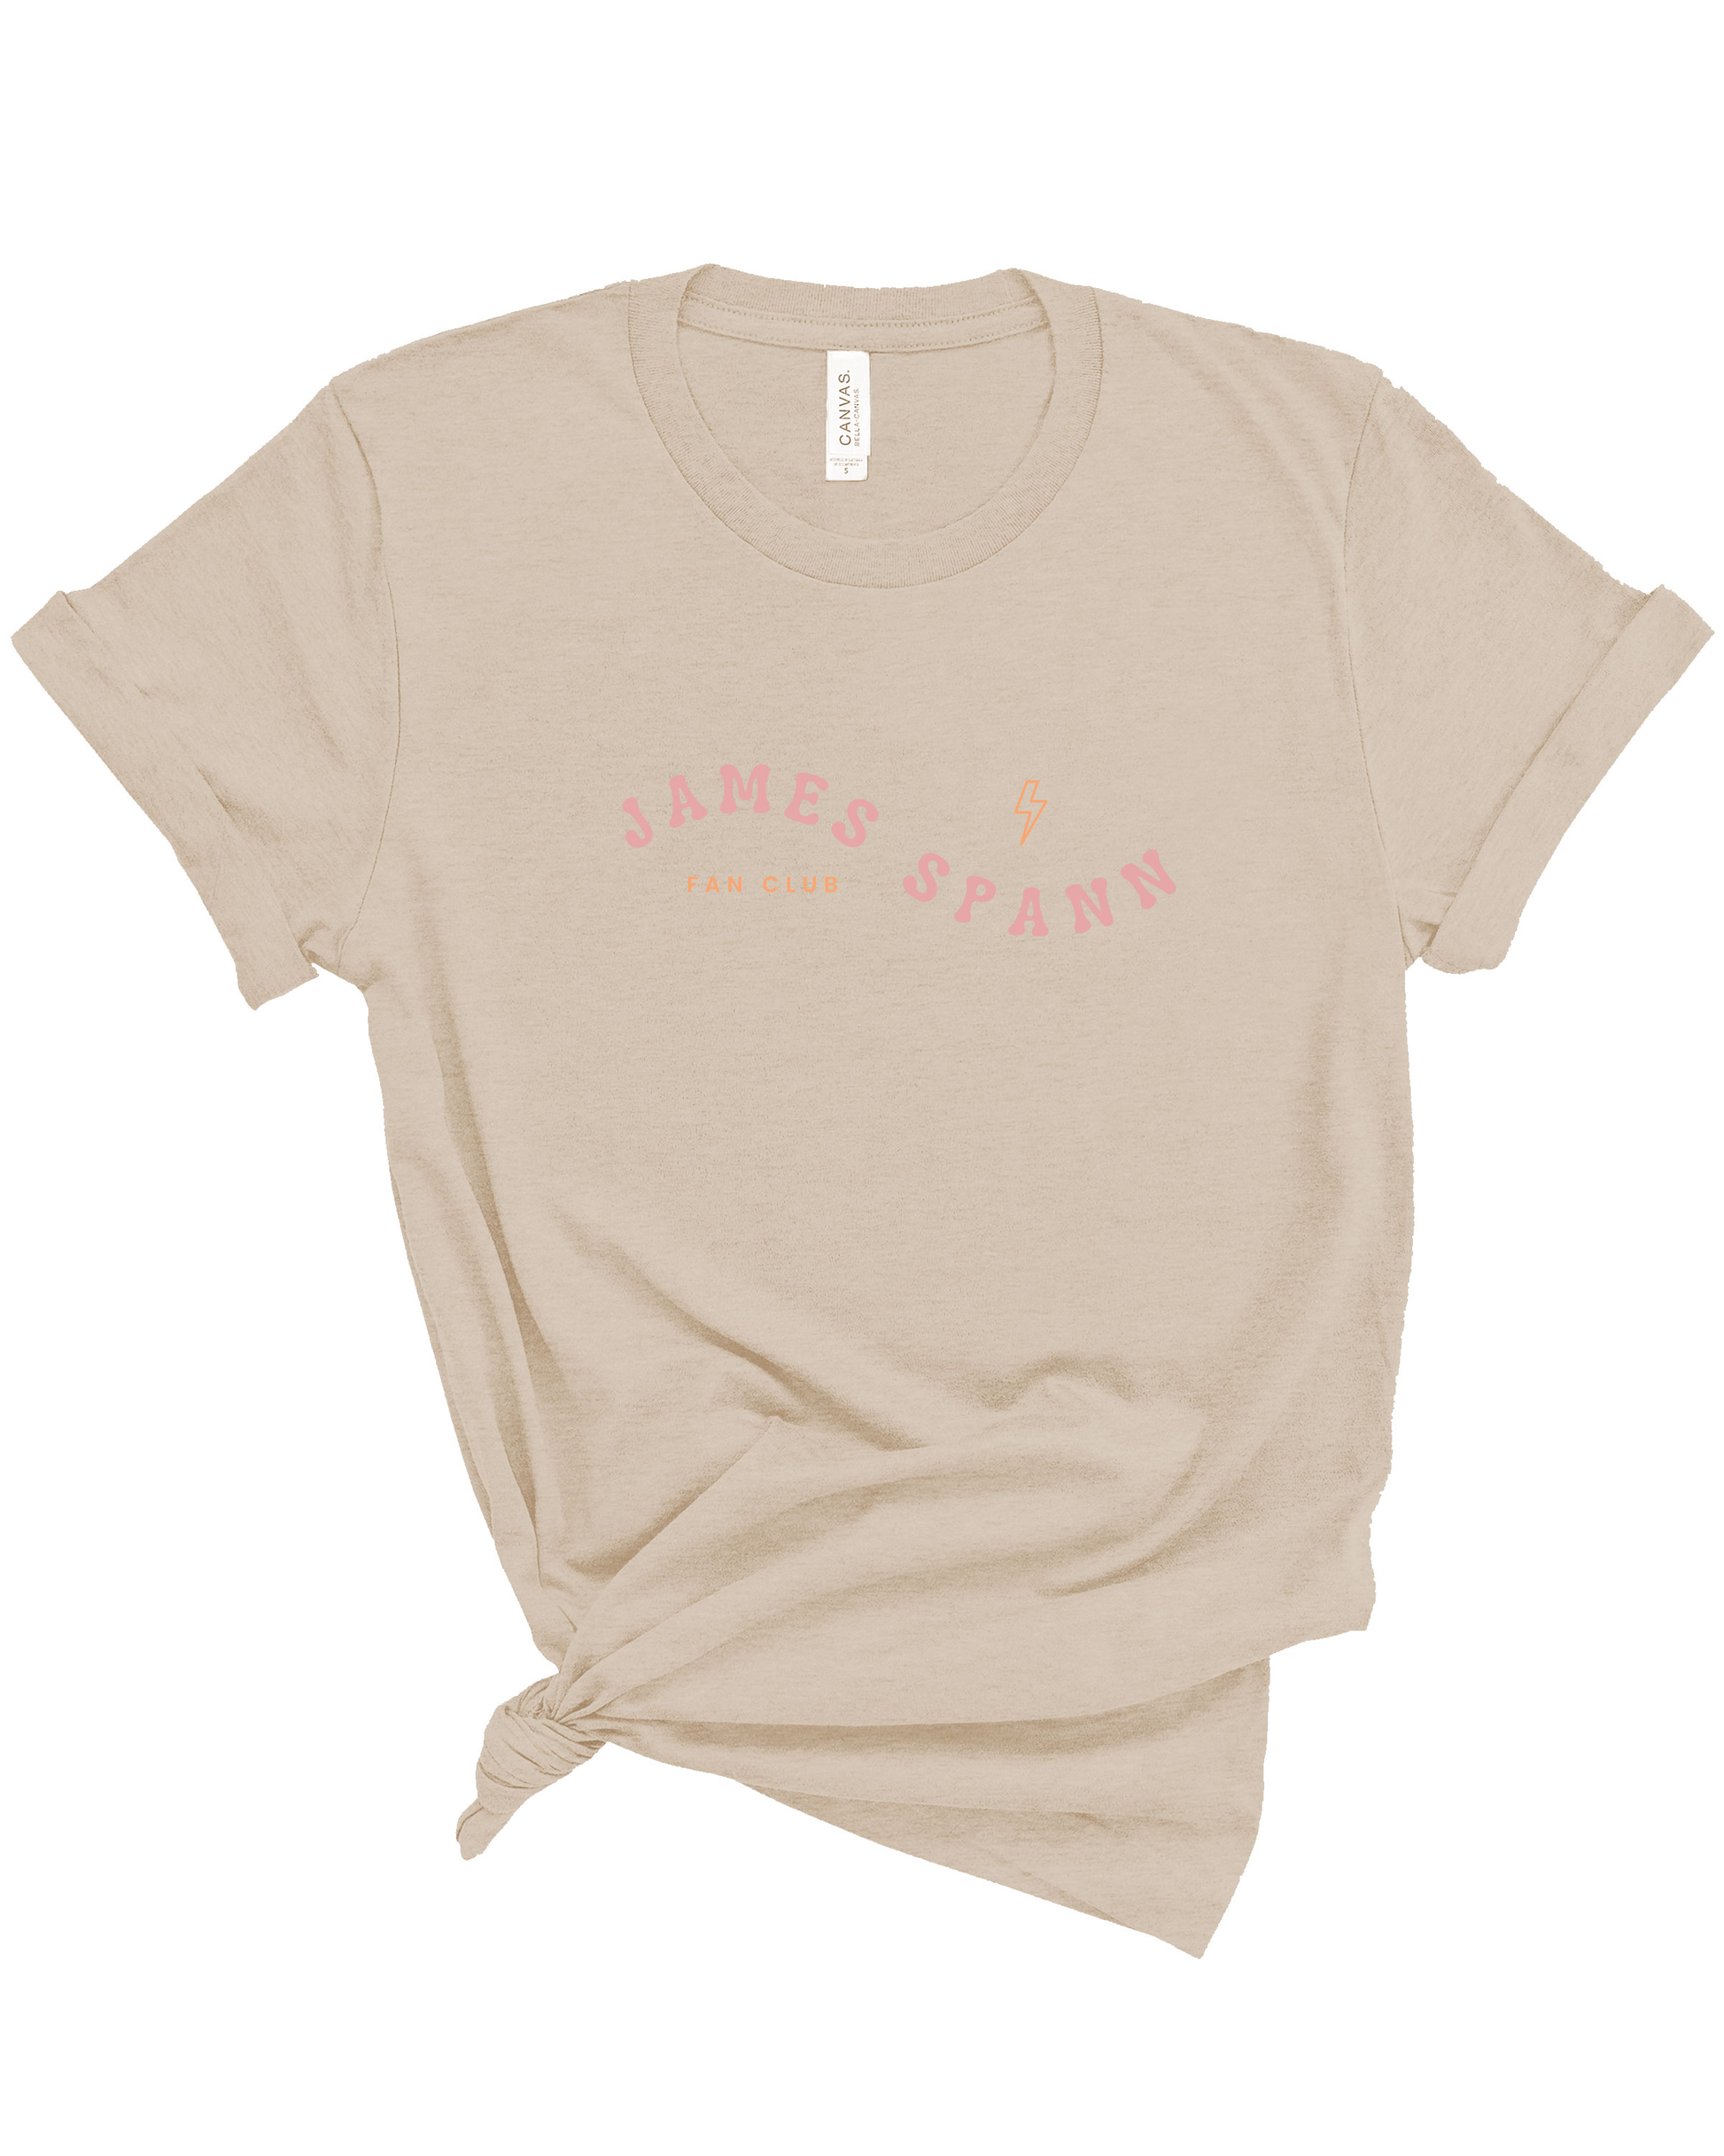 Curvy Spann Club | Tee | Adult-Sister Shirts-Sister Shirts, Cute & Custom Tees for Mama & Littles in Trussville, Alabama.